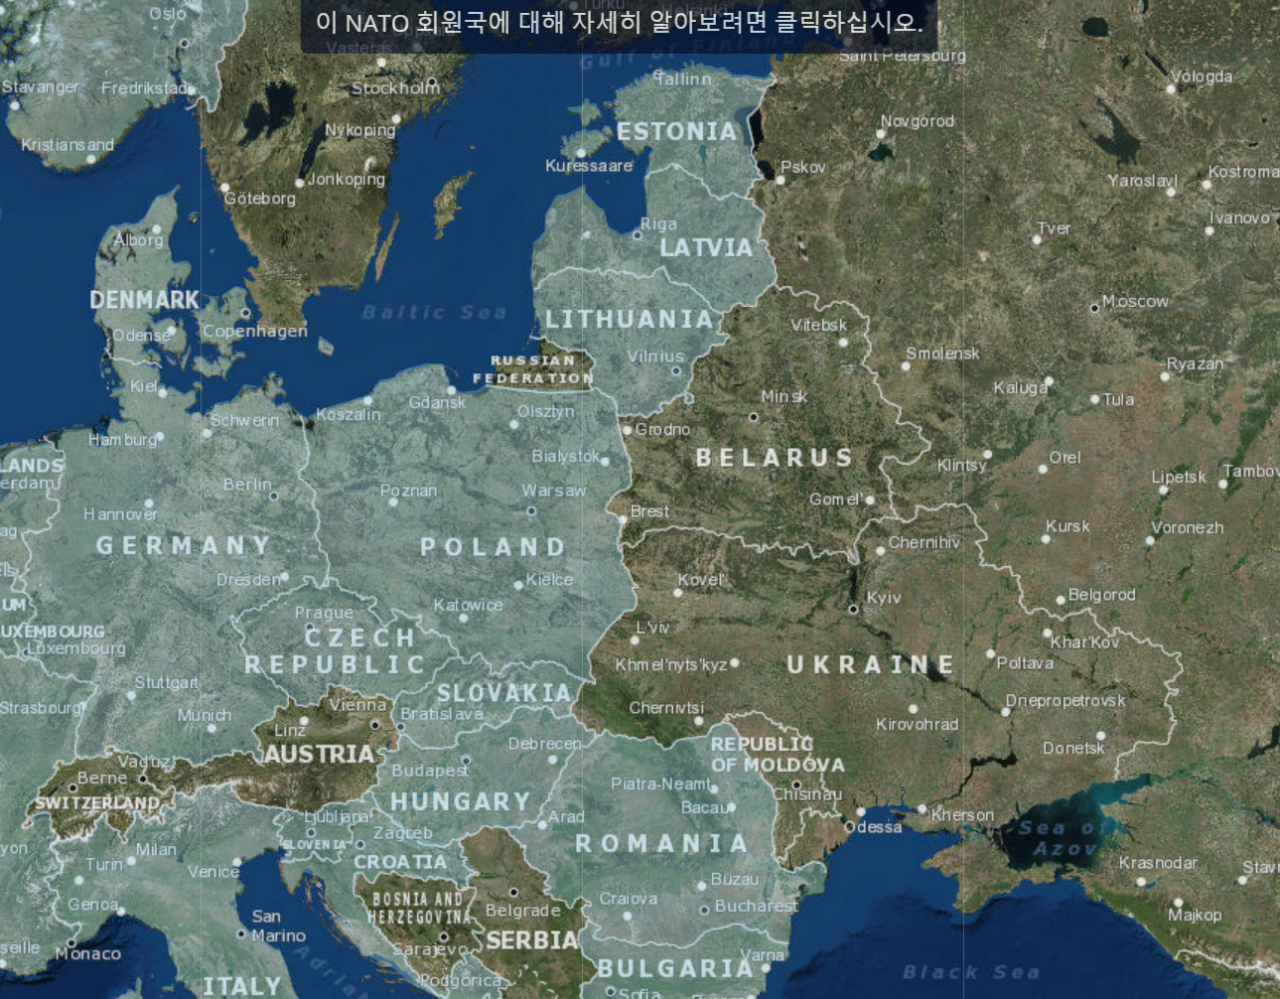 image.png [속보] 우크라이나 속보 정리 (한국시간 새벽 3시~4시까지)